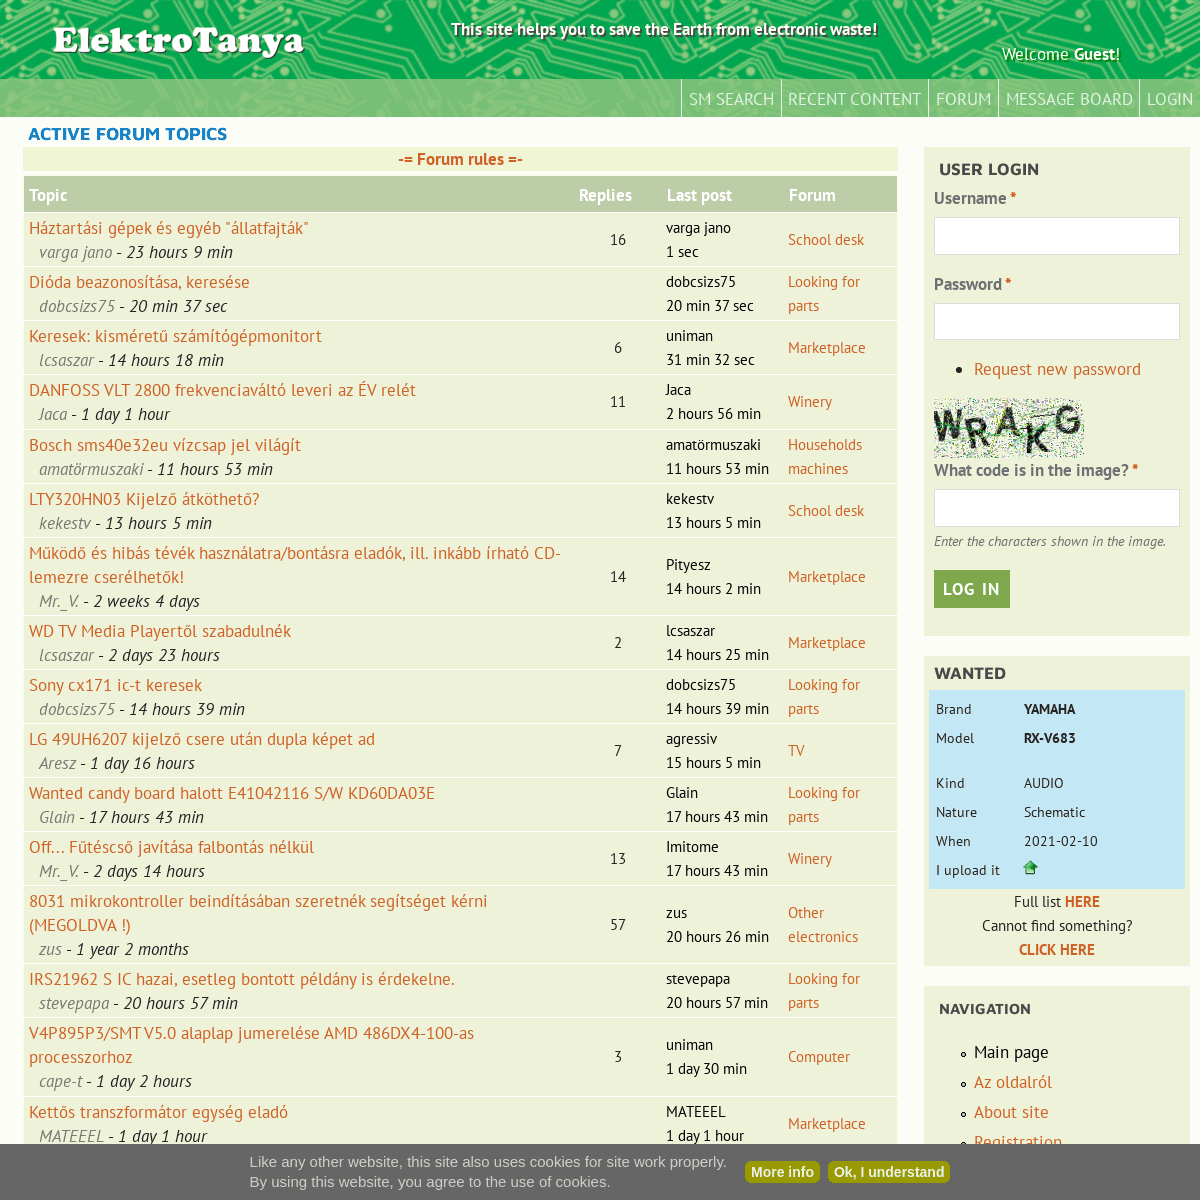 A complete backup of https://elektrotanya.com